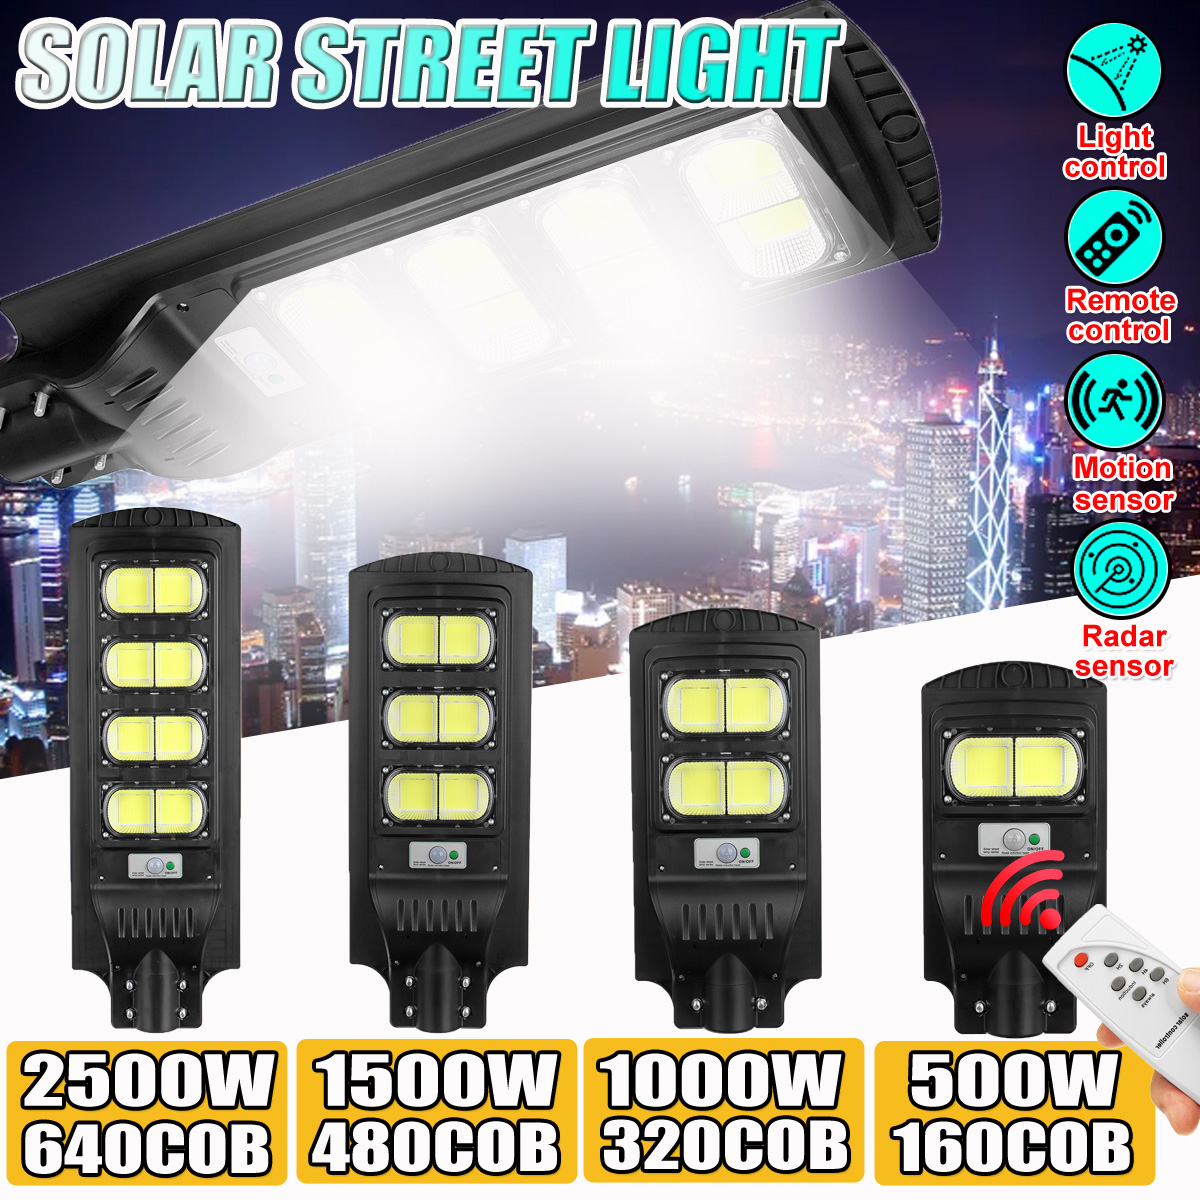 160320480640COB-LED-Solar-Street-Light-PIR-Motion-Sensor-Outdoor-Wall-Lamp-With-Remote-Control-1705816-1